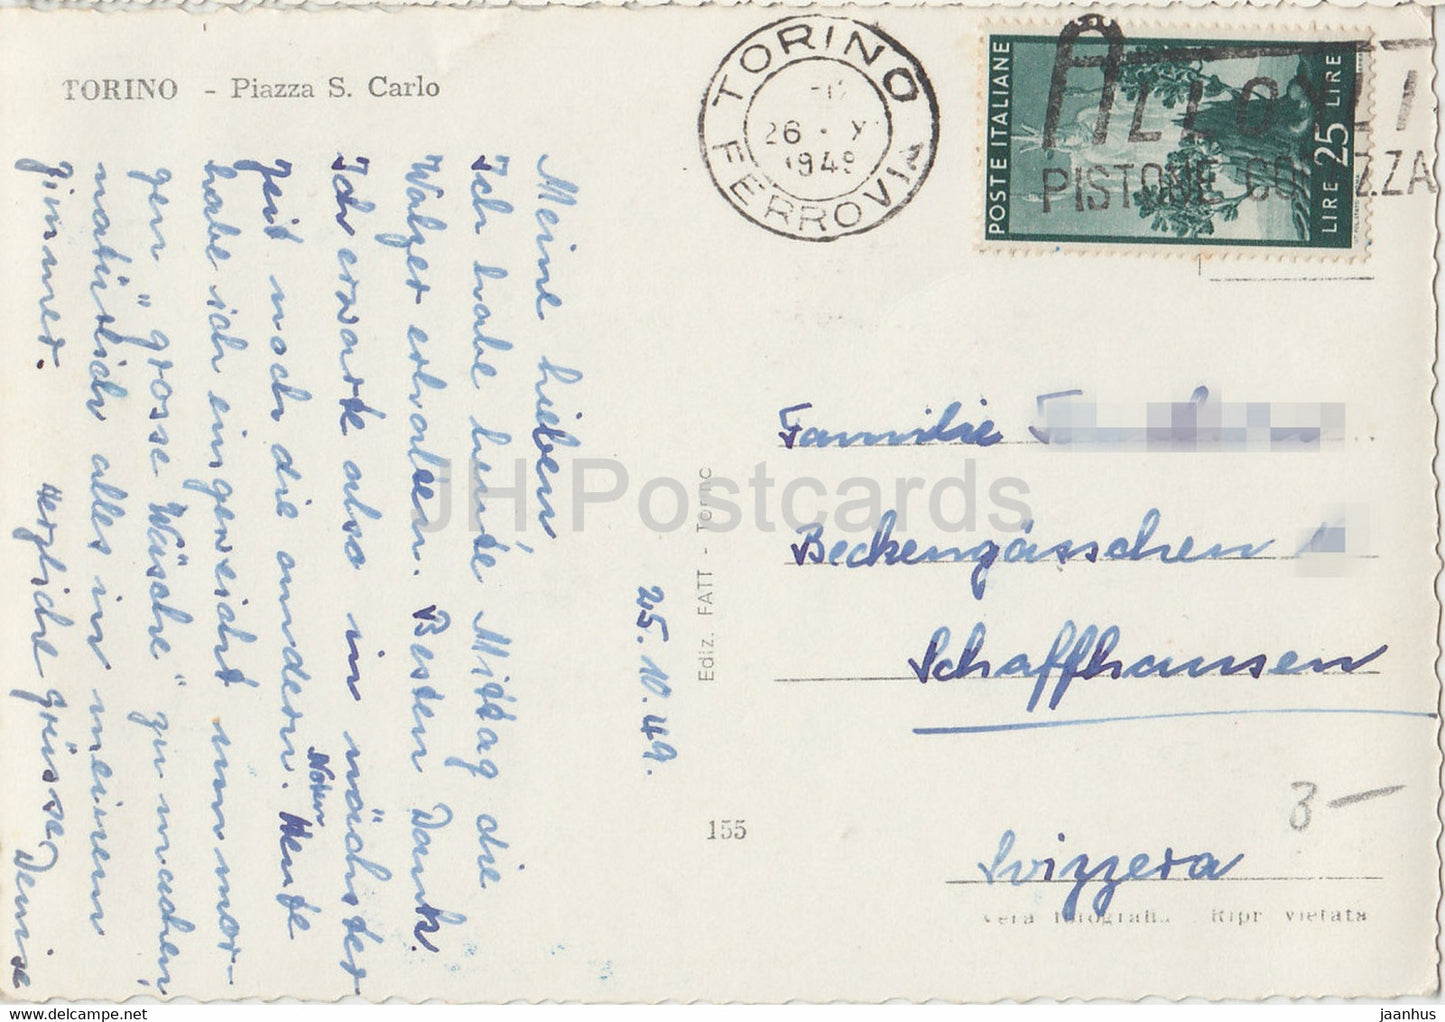 Turin - Turin - Piazza S Carlo - Platz - Straßenbahn - alte Postkarte - 1949 - Italien - gebraucht